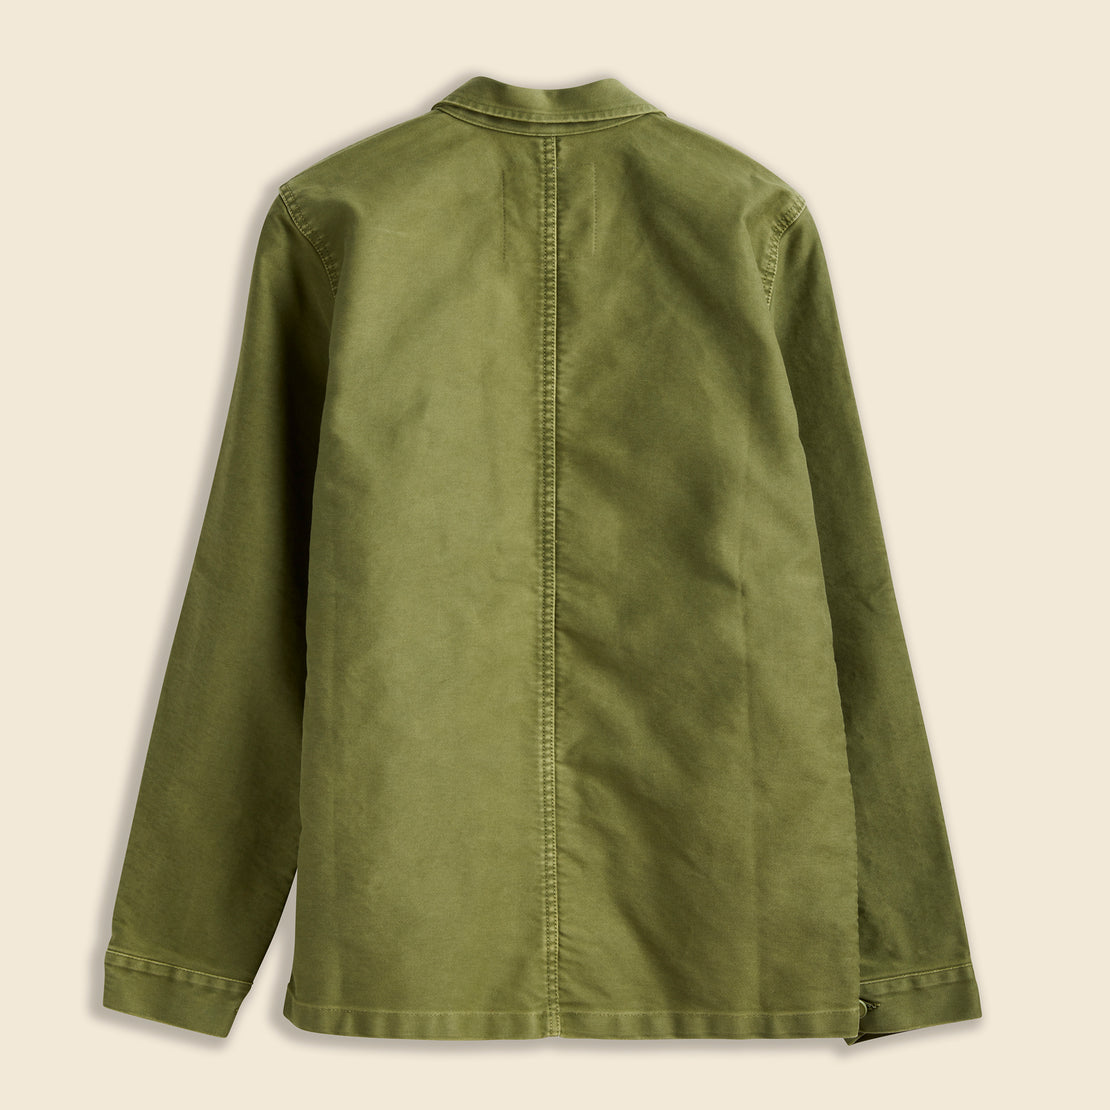 Vintage Washed Work Jacket - Khaki - Le Mont Saint Michel - STAG Provisions - W - Outerwear - Coat/Jacket